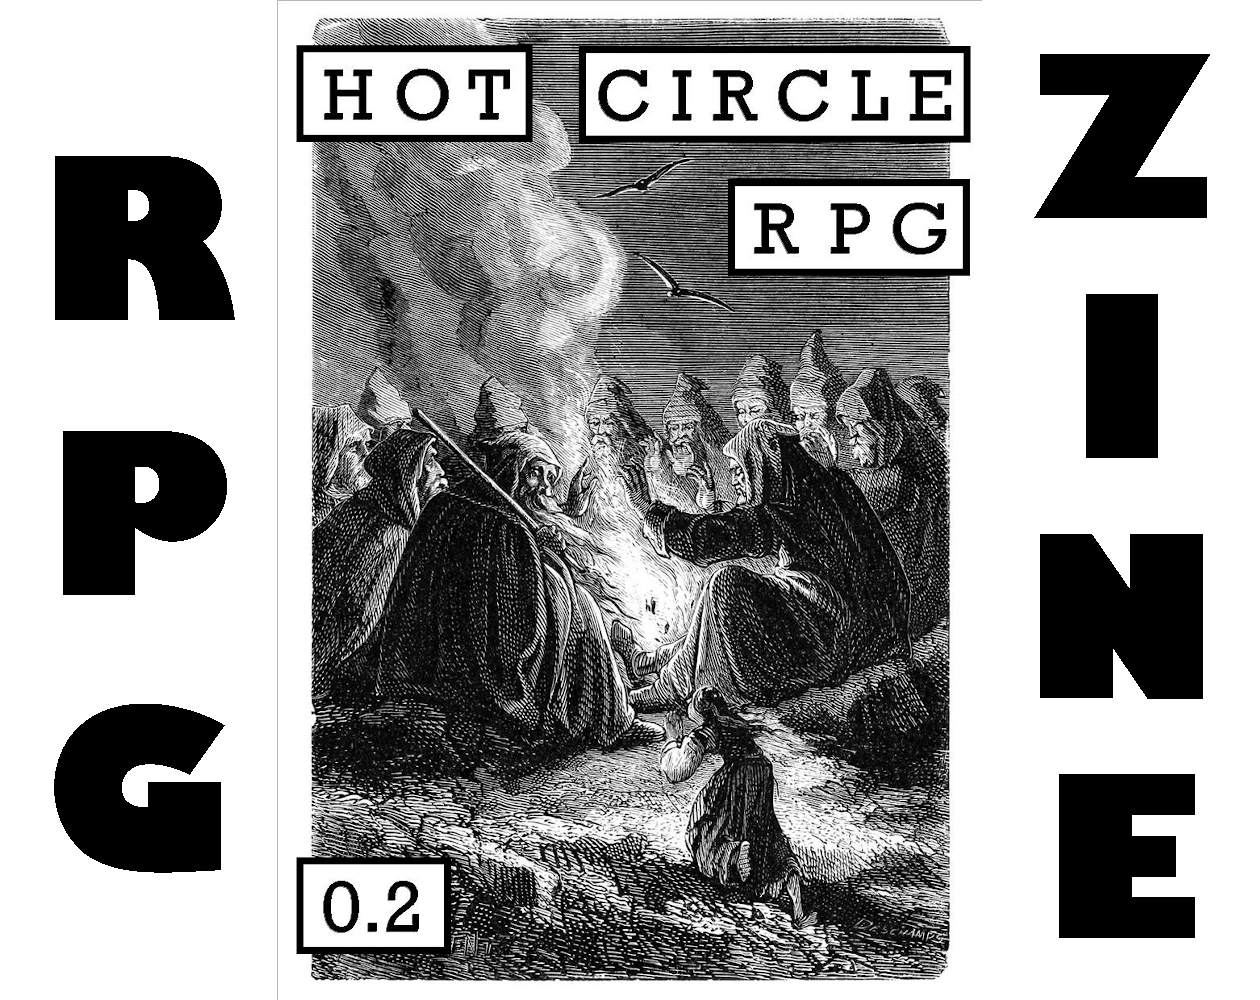 Hot Circle RPG Zine